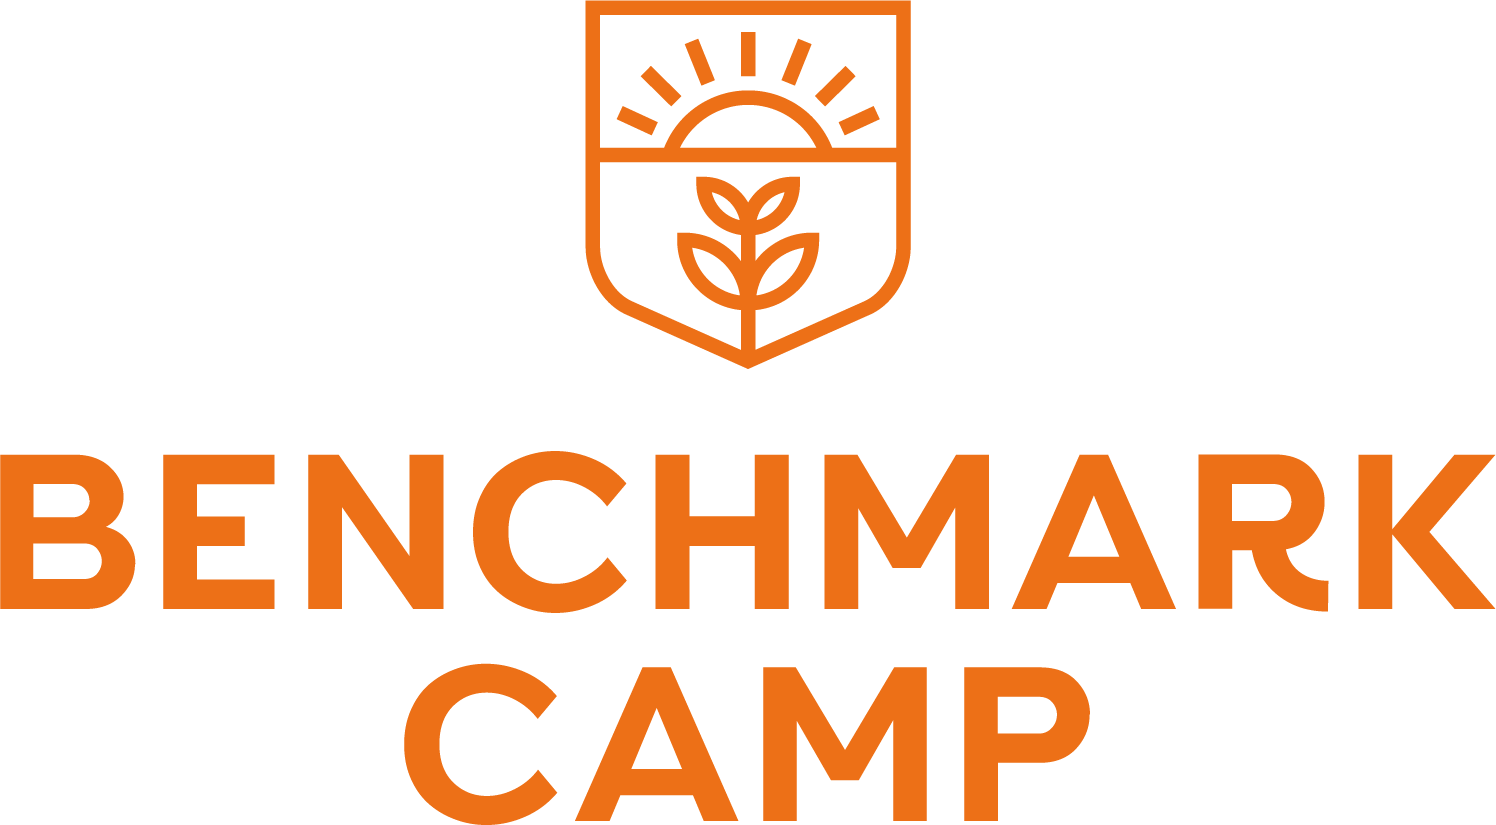 BENCHMARK 22d Identity Camp Wordmark Orange 